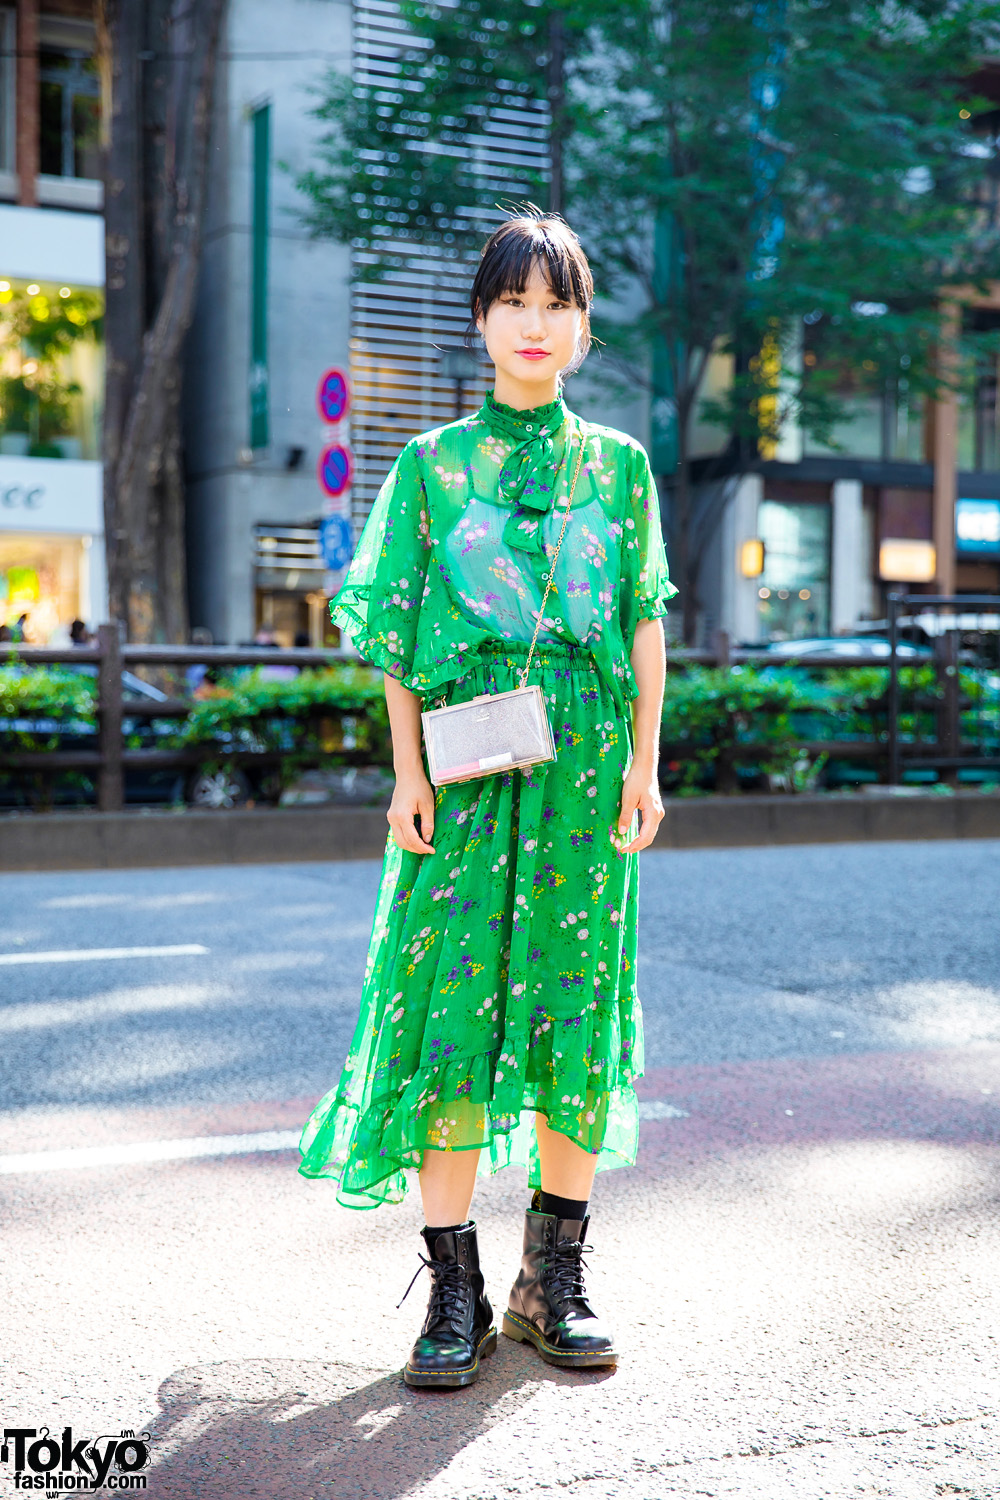 Harajuku Girl in Jouetie Green Floral Print Dress, Kate Spade Bag & Dr. Martens